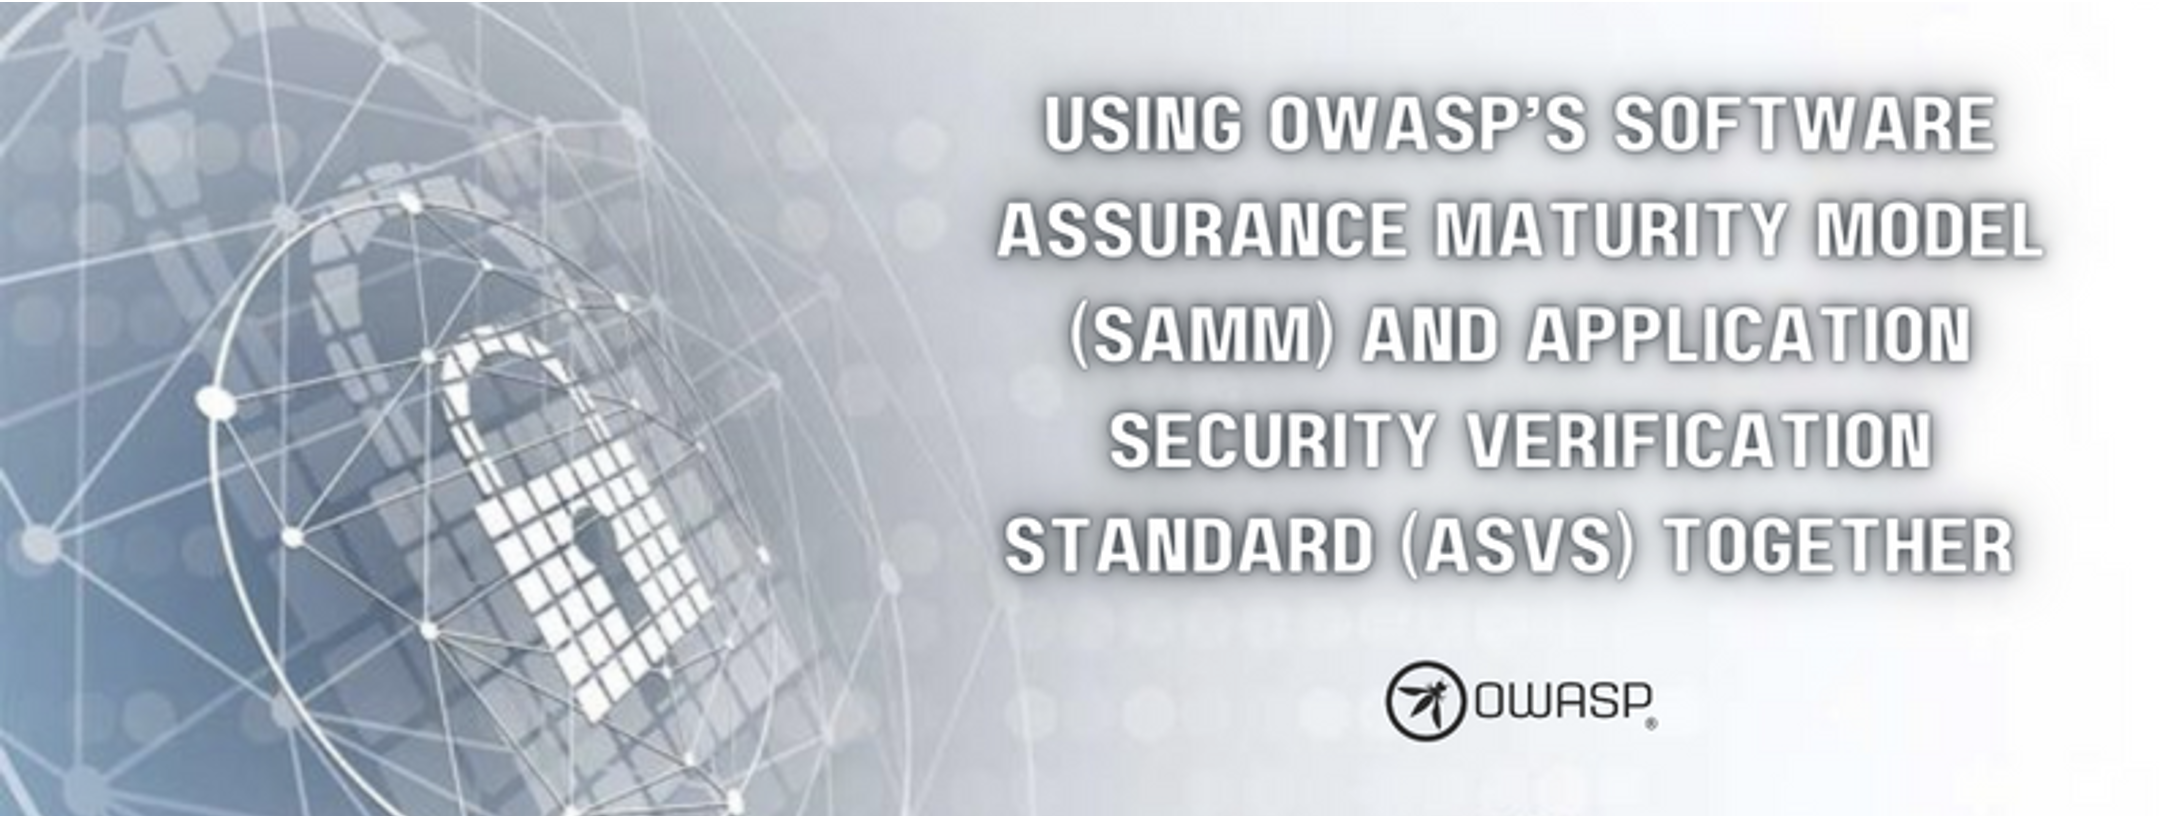 Using OWASP’s Software Assurance Maturity Model (SAMM) and Application Security Verification Standard (ASVS) Together